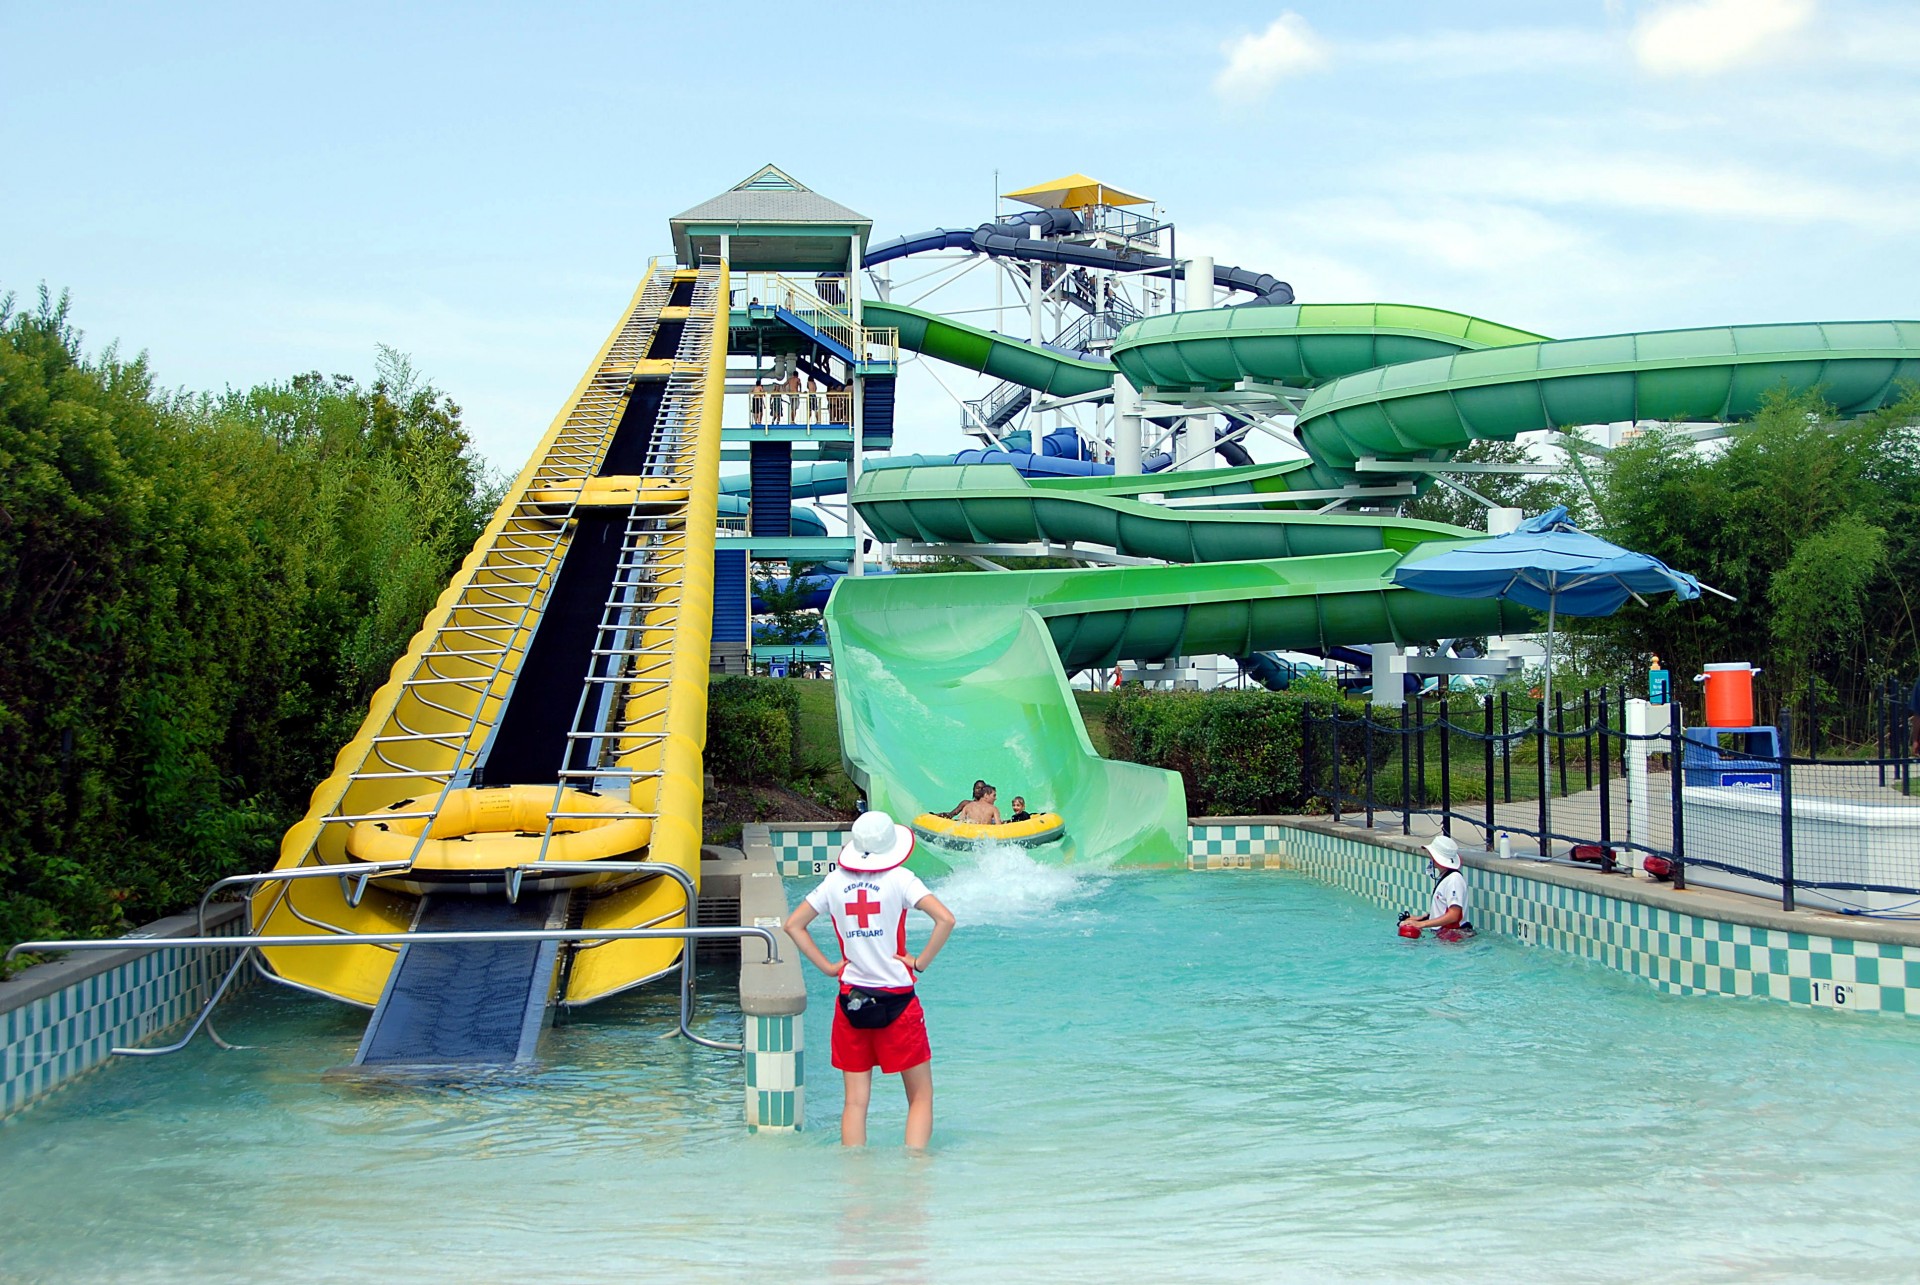 Water park,park,theme park,ride,slide - free image from needpix.com